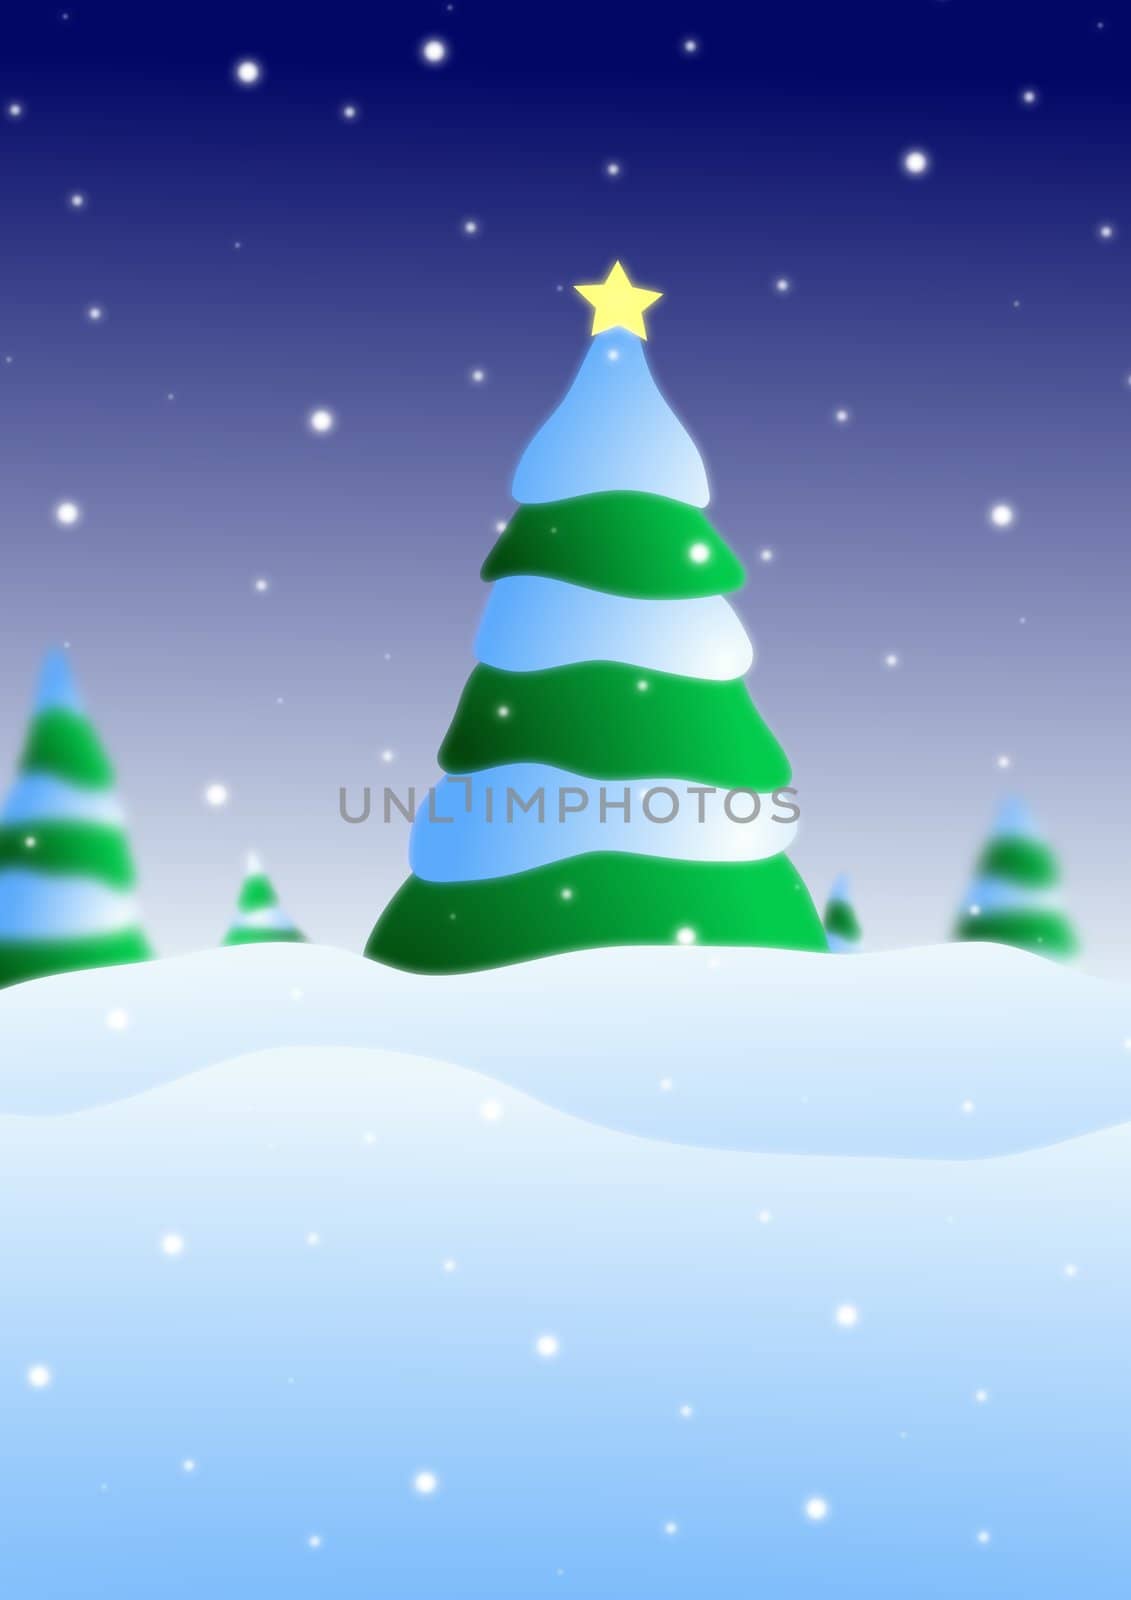 Illustration of a Christmas tree scene